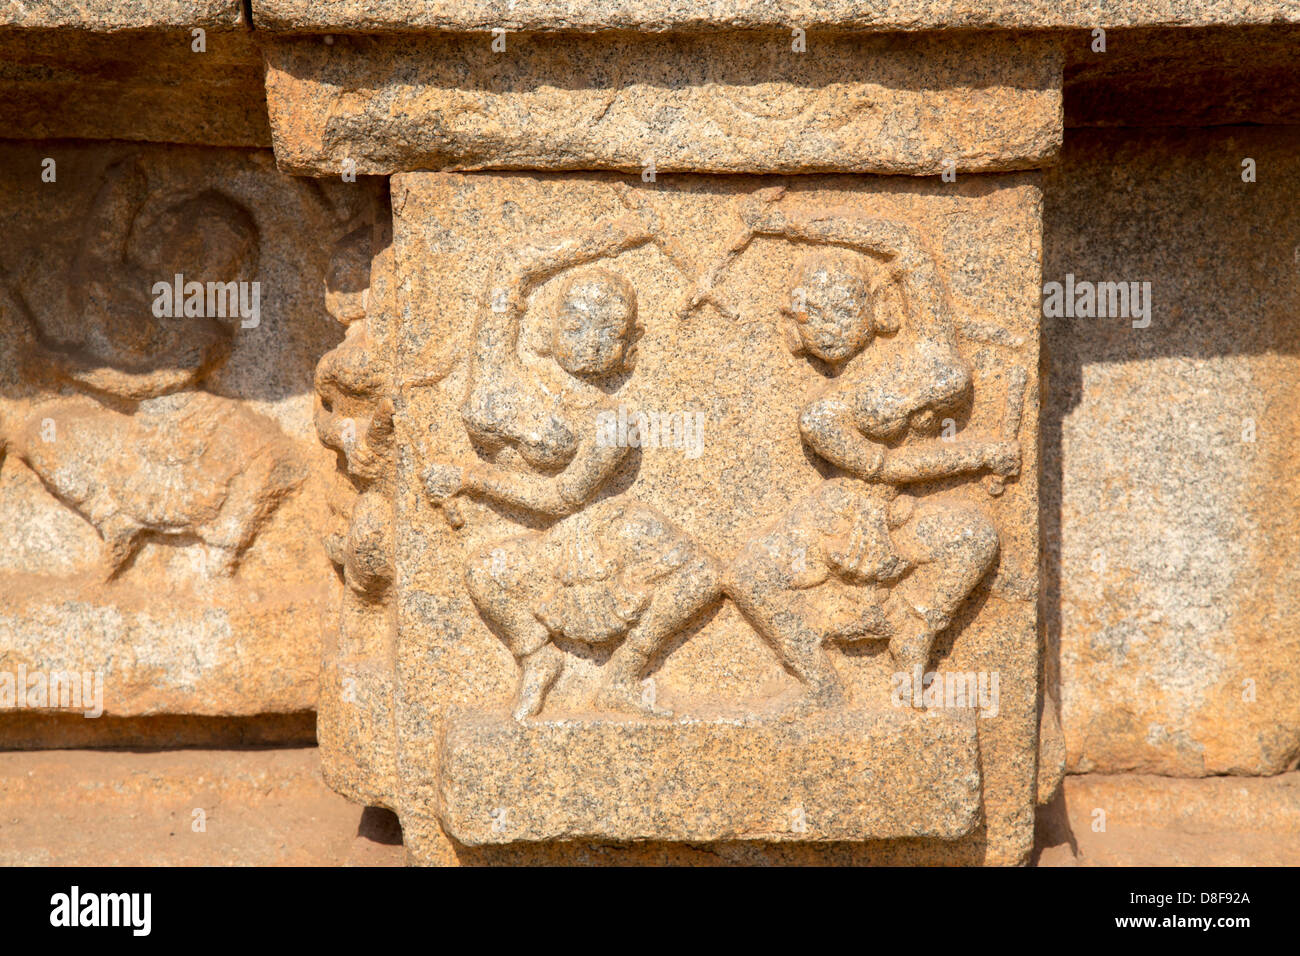 Steinschnitzereien, Hazararama Tempel, Hampi, Indien Stockfoto